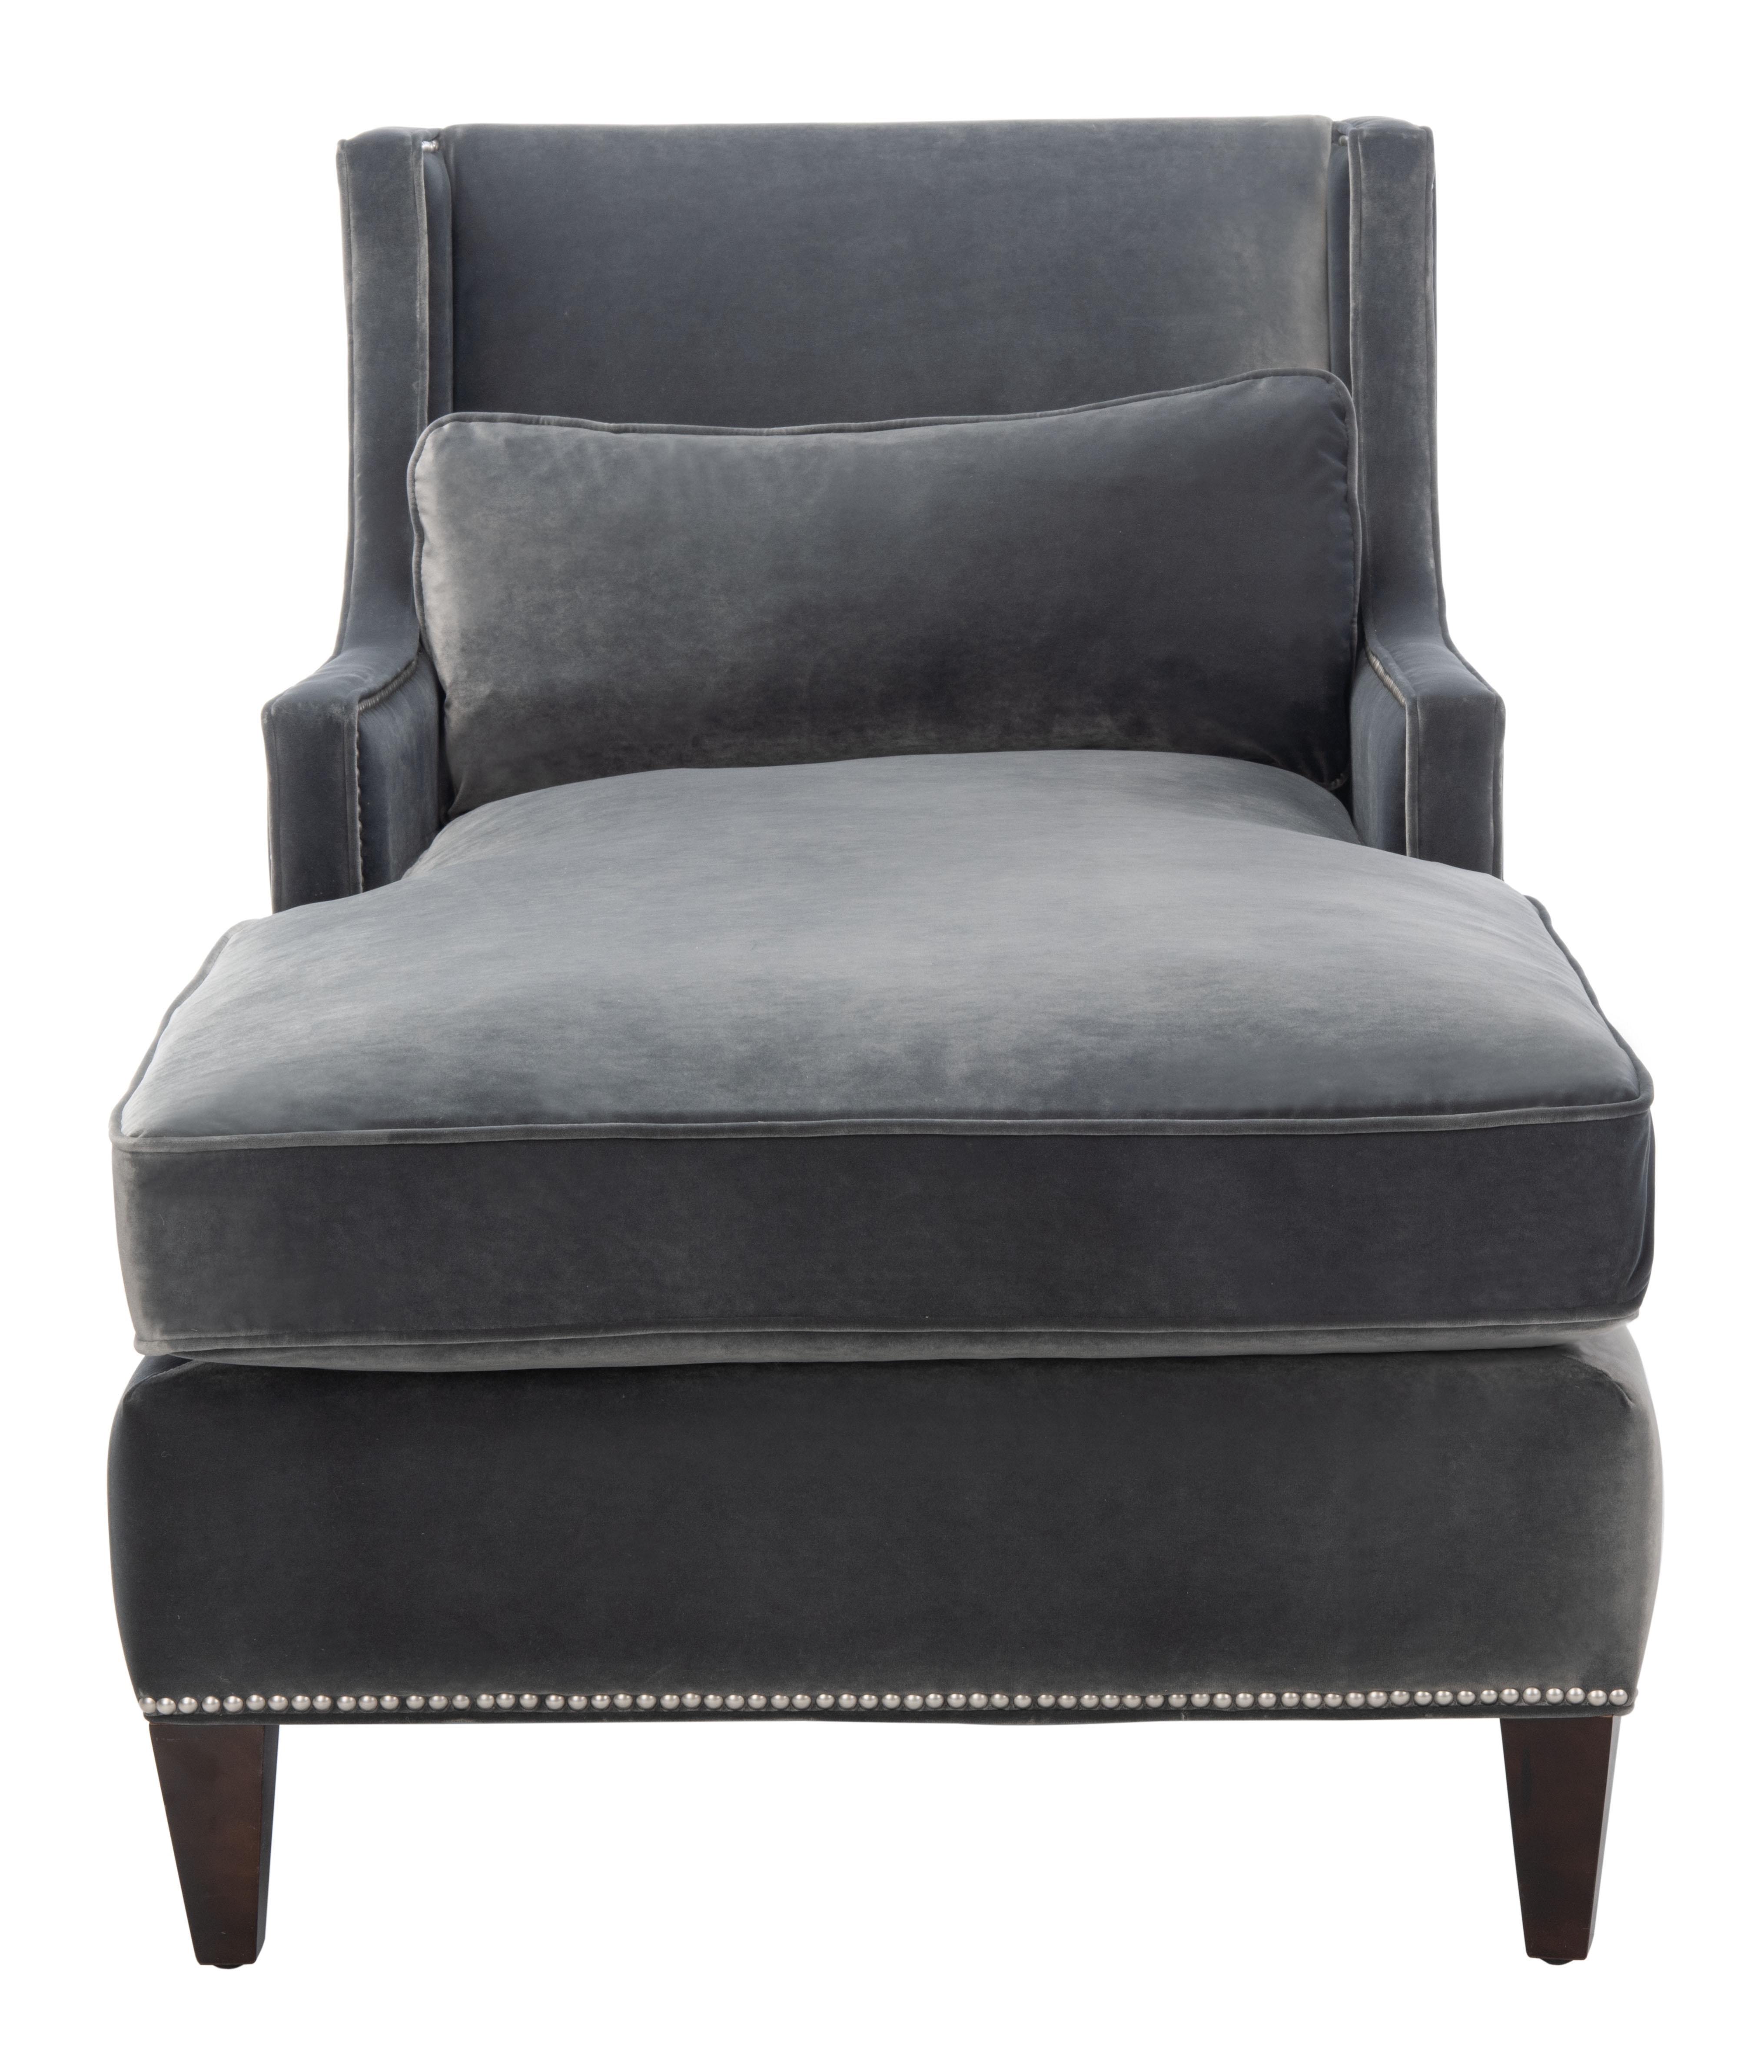 Vitali Studded Chaise - Charcoal - Arlo Home - Image 0